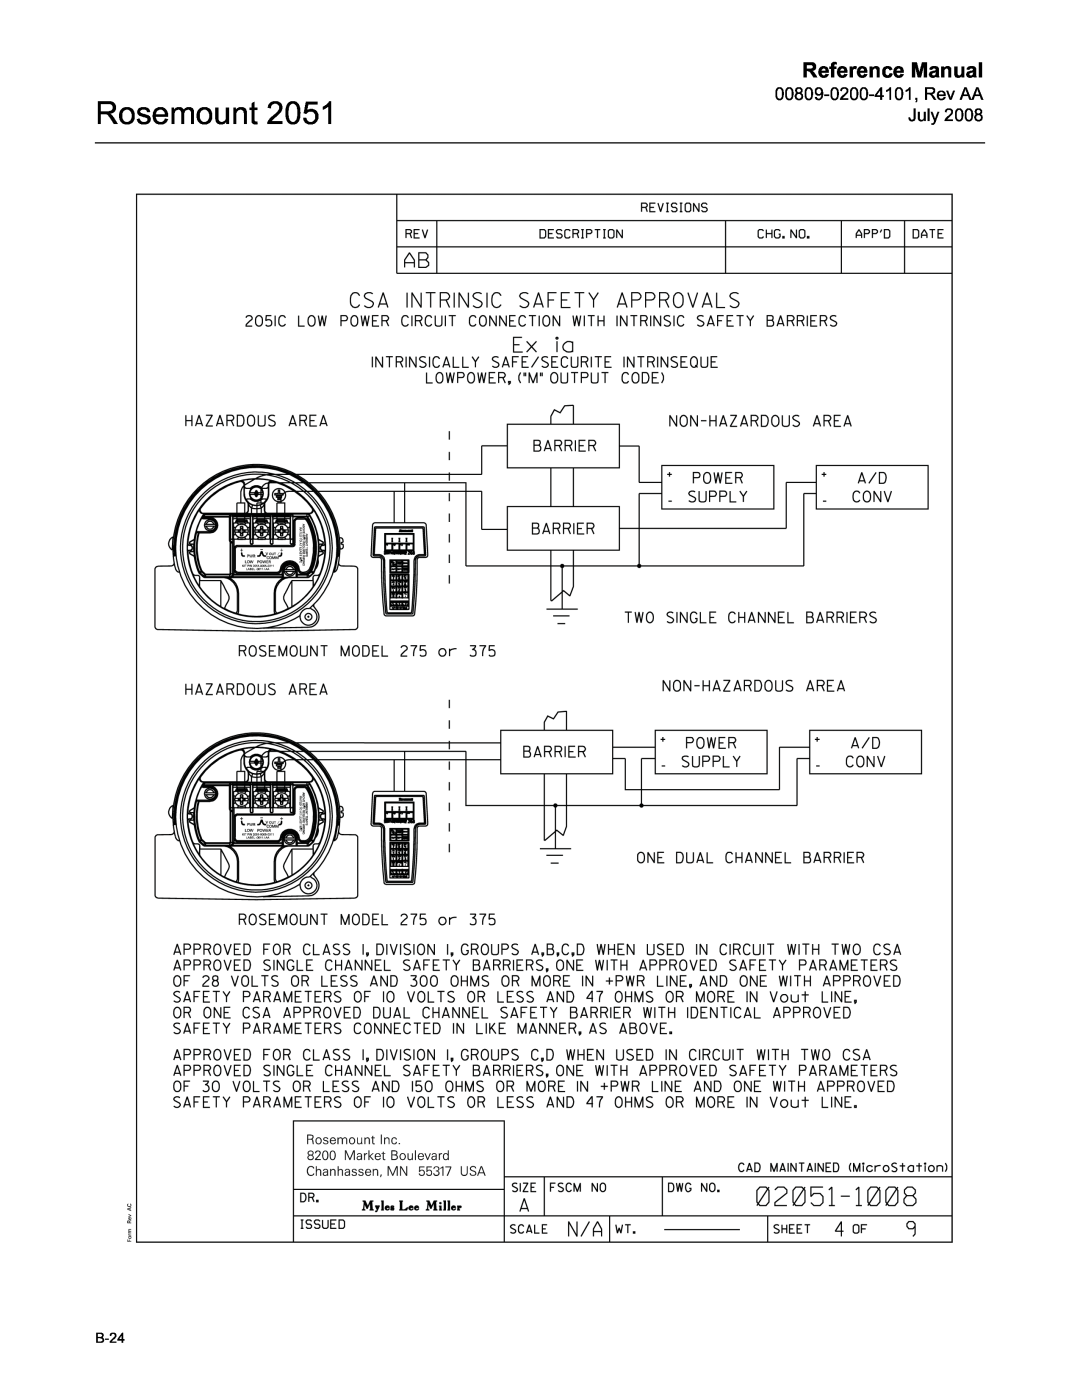 Emerson Process Management 2051 manual Rosemount, Reference Manual, B-24 